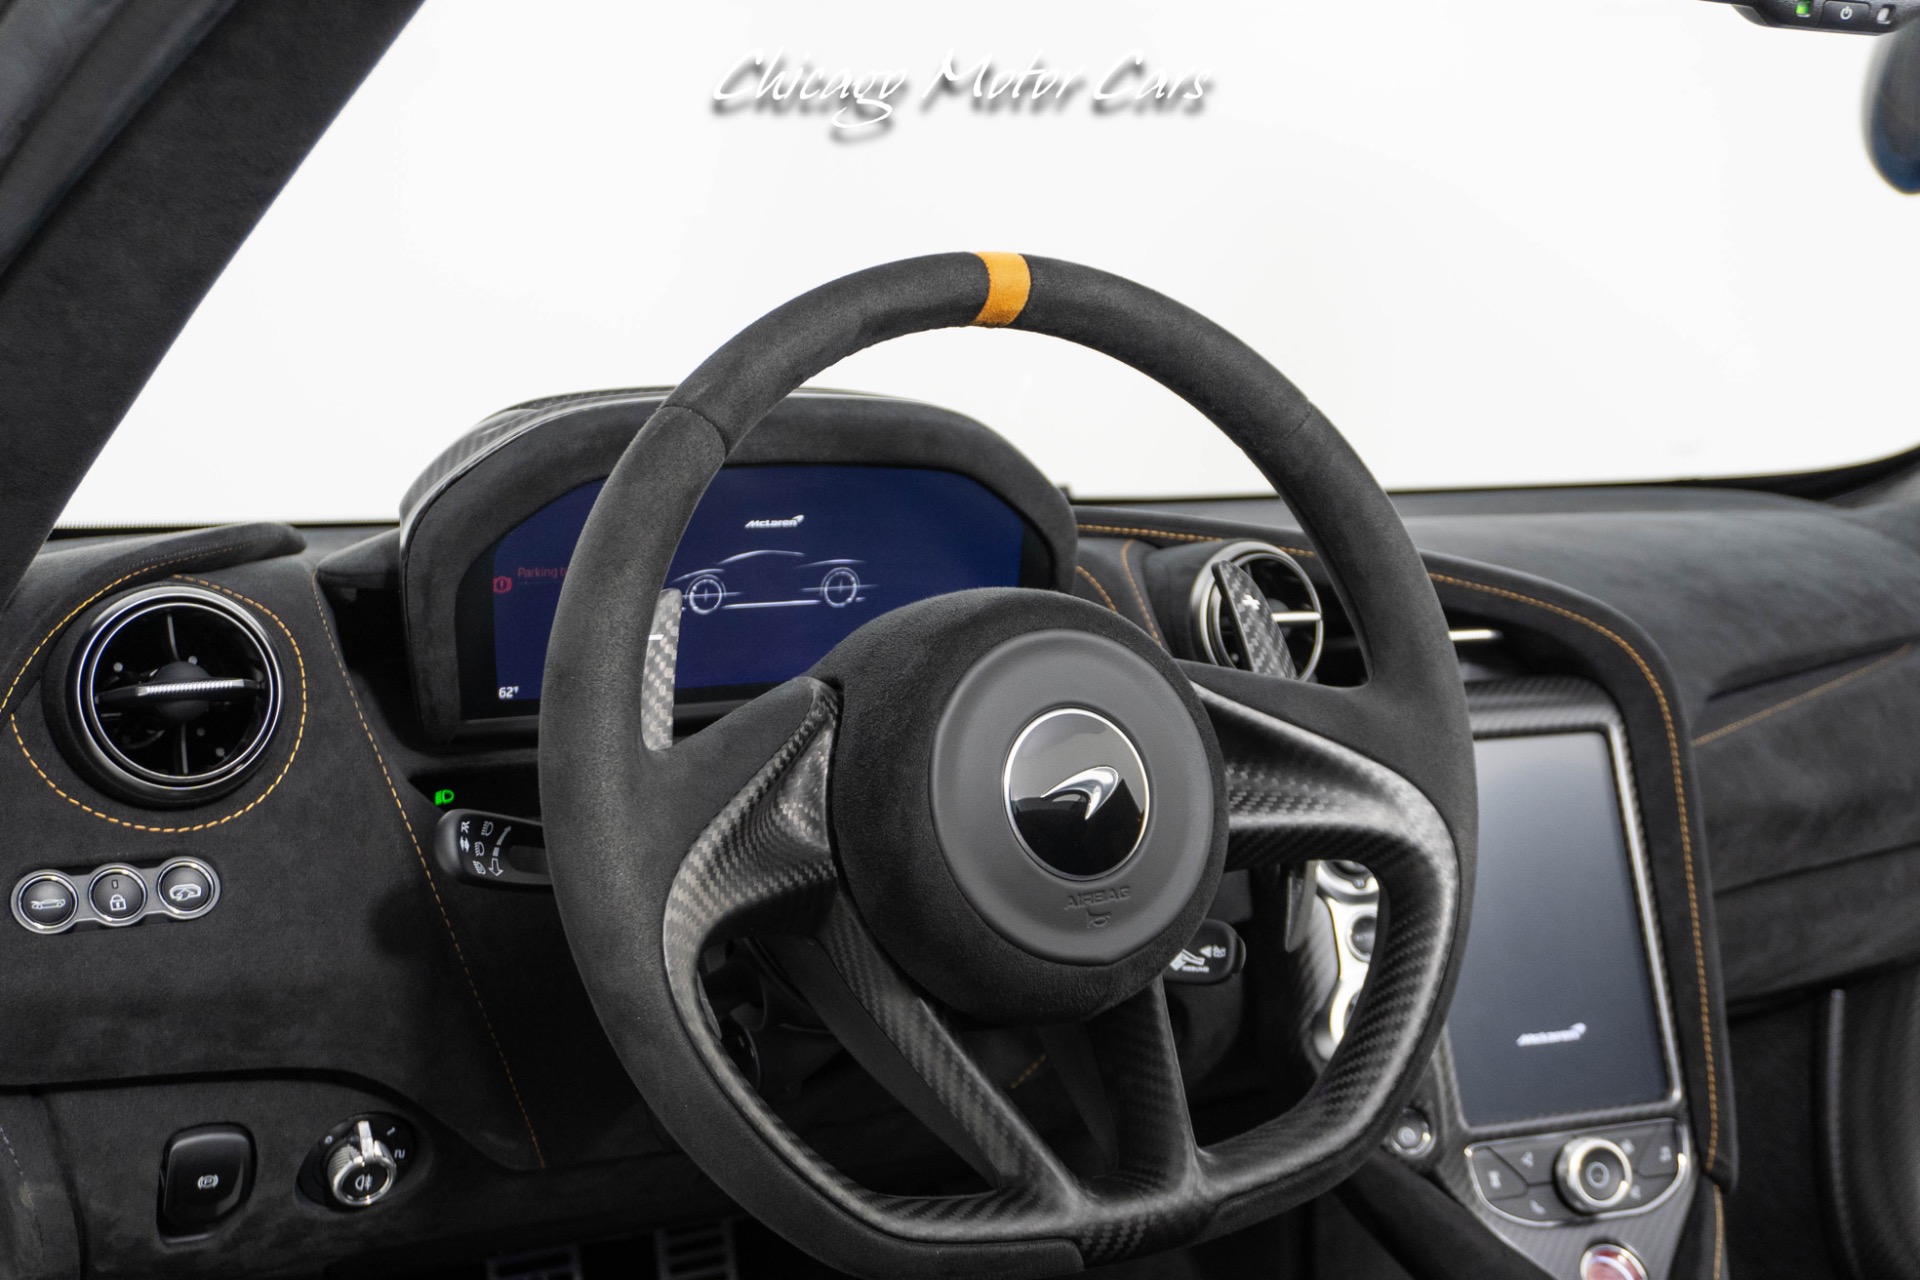 Used-2022-McLaren-765LT-Spider-Anrky-Wheels-1of1-MSO-Celerium-Blue-Only-1600-Miles